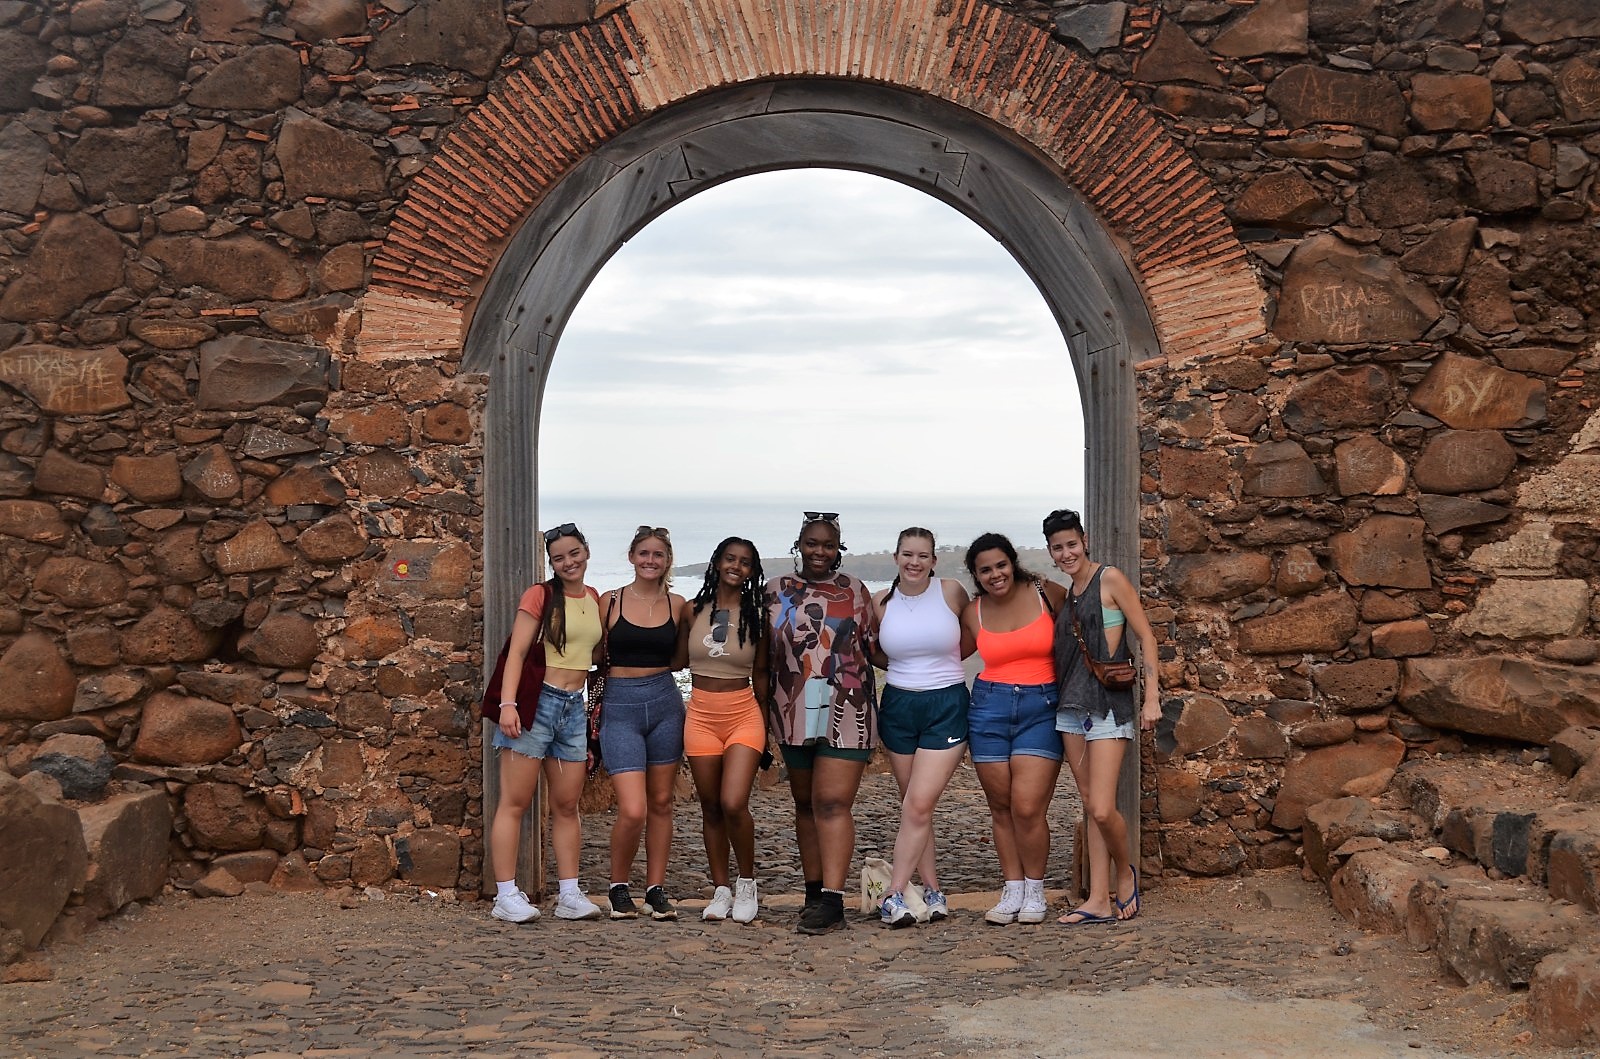 Atlantis students on an excursion in Cape Verde (an Atlantis site).